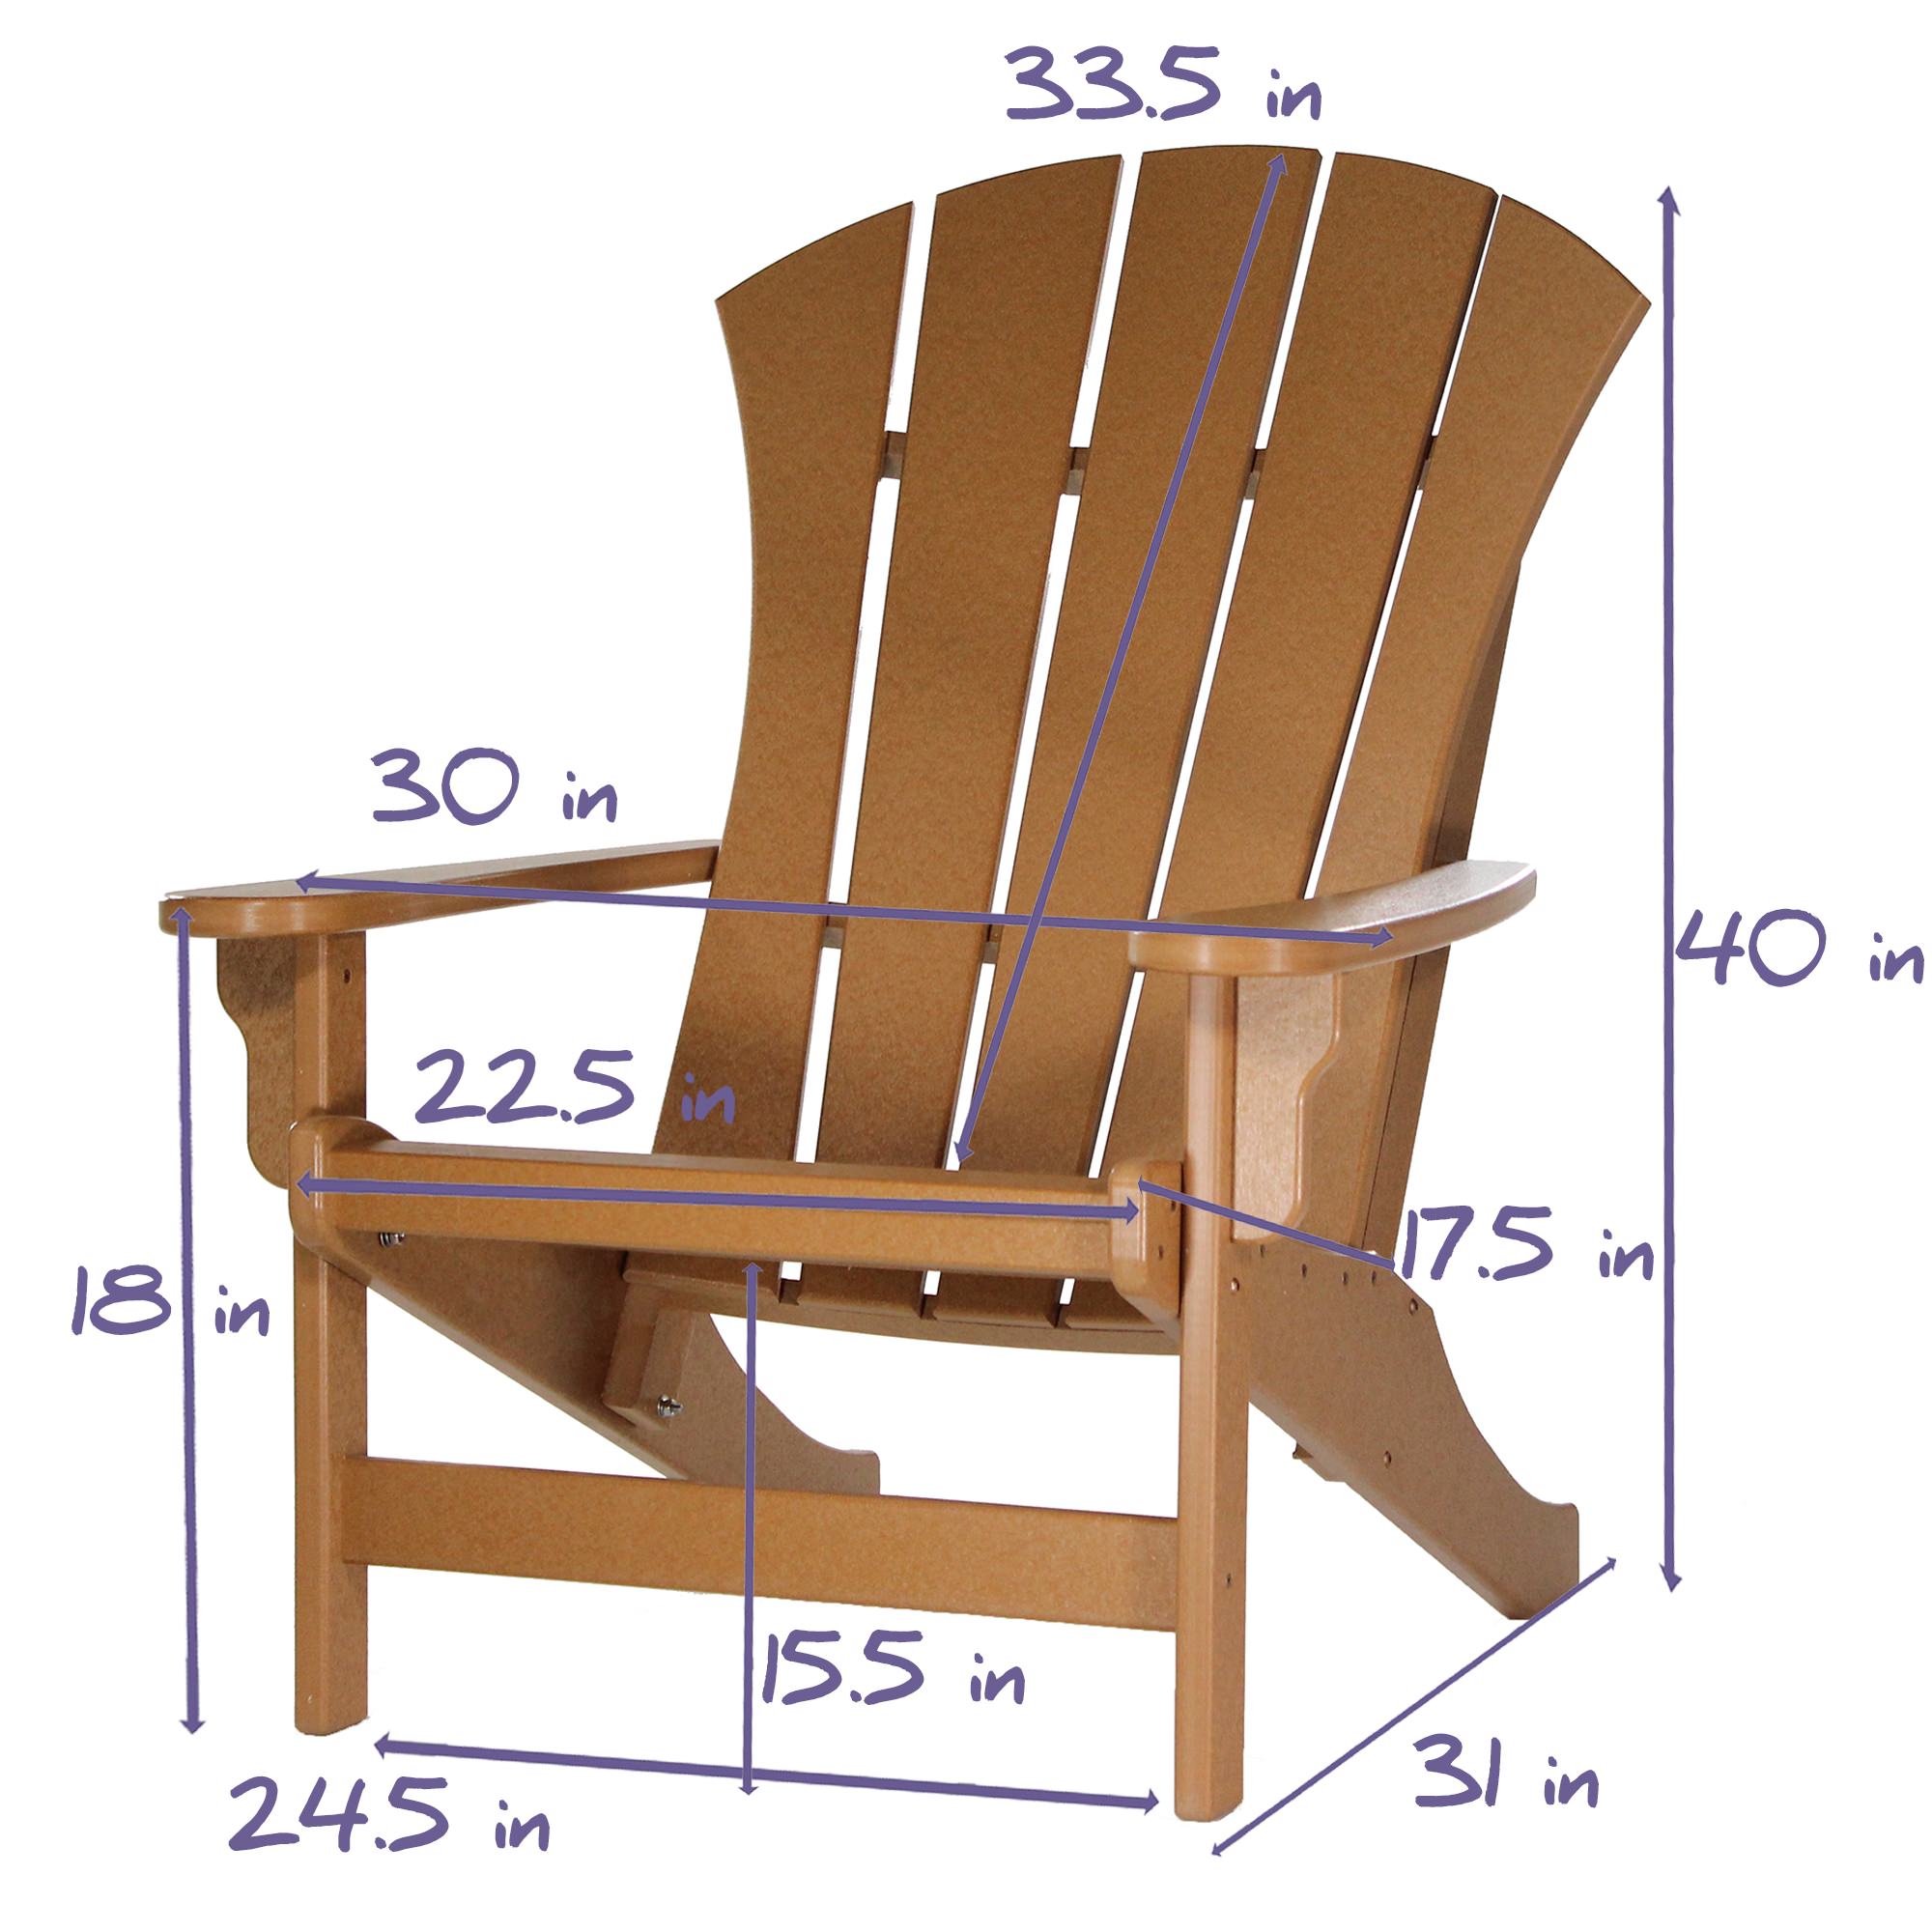 Portable: This Adirondack chair measurements